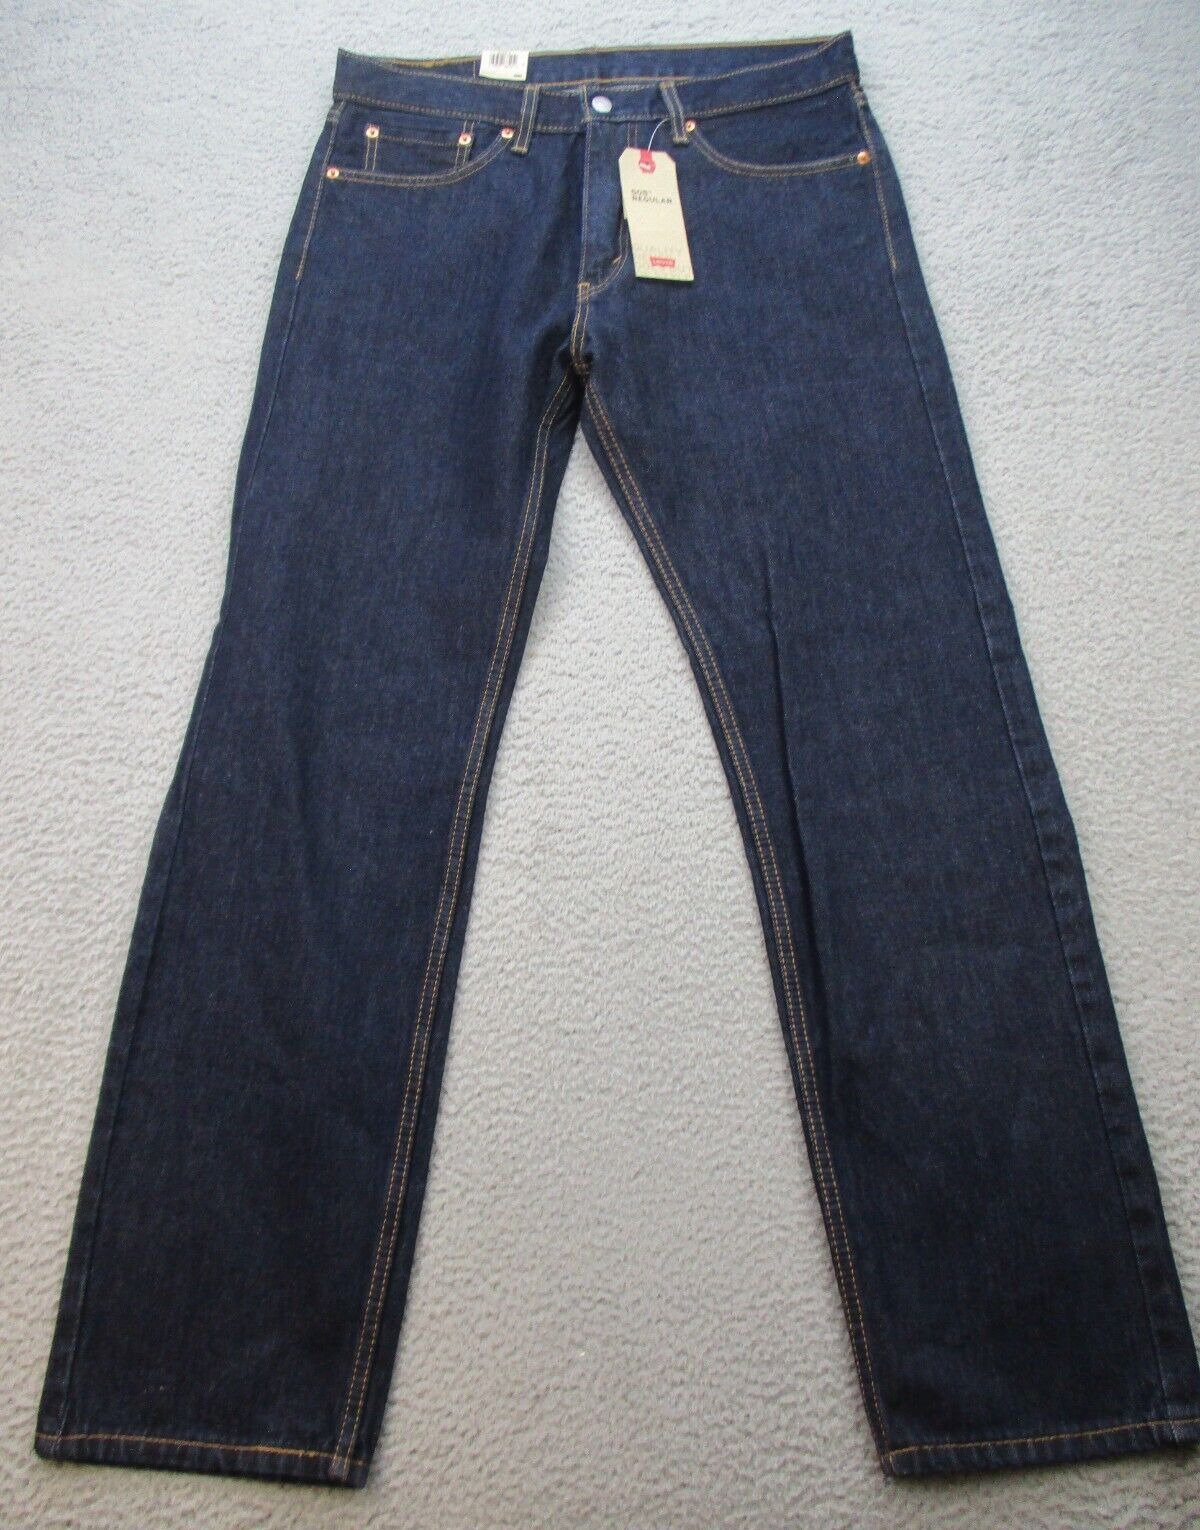 Levi’s 505 Jeans 34 x 31.5 (Tag 33x32) Dark Wash Regular Straight Leg Cowboy NWT